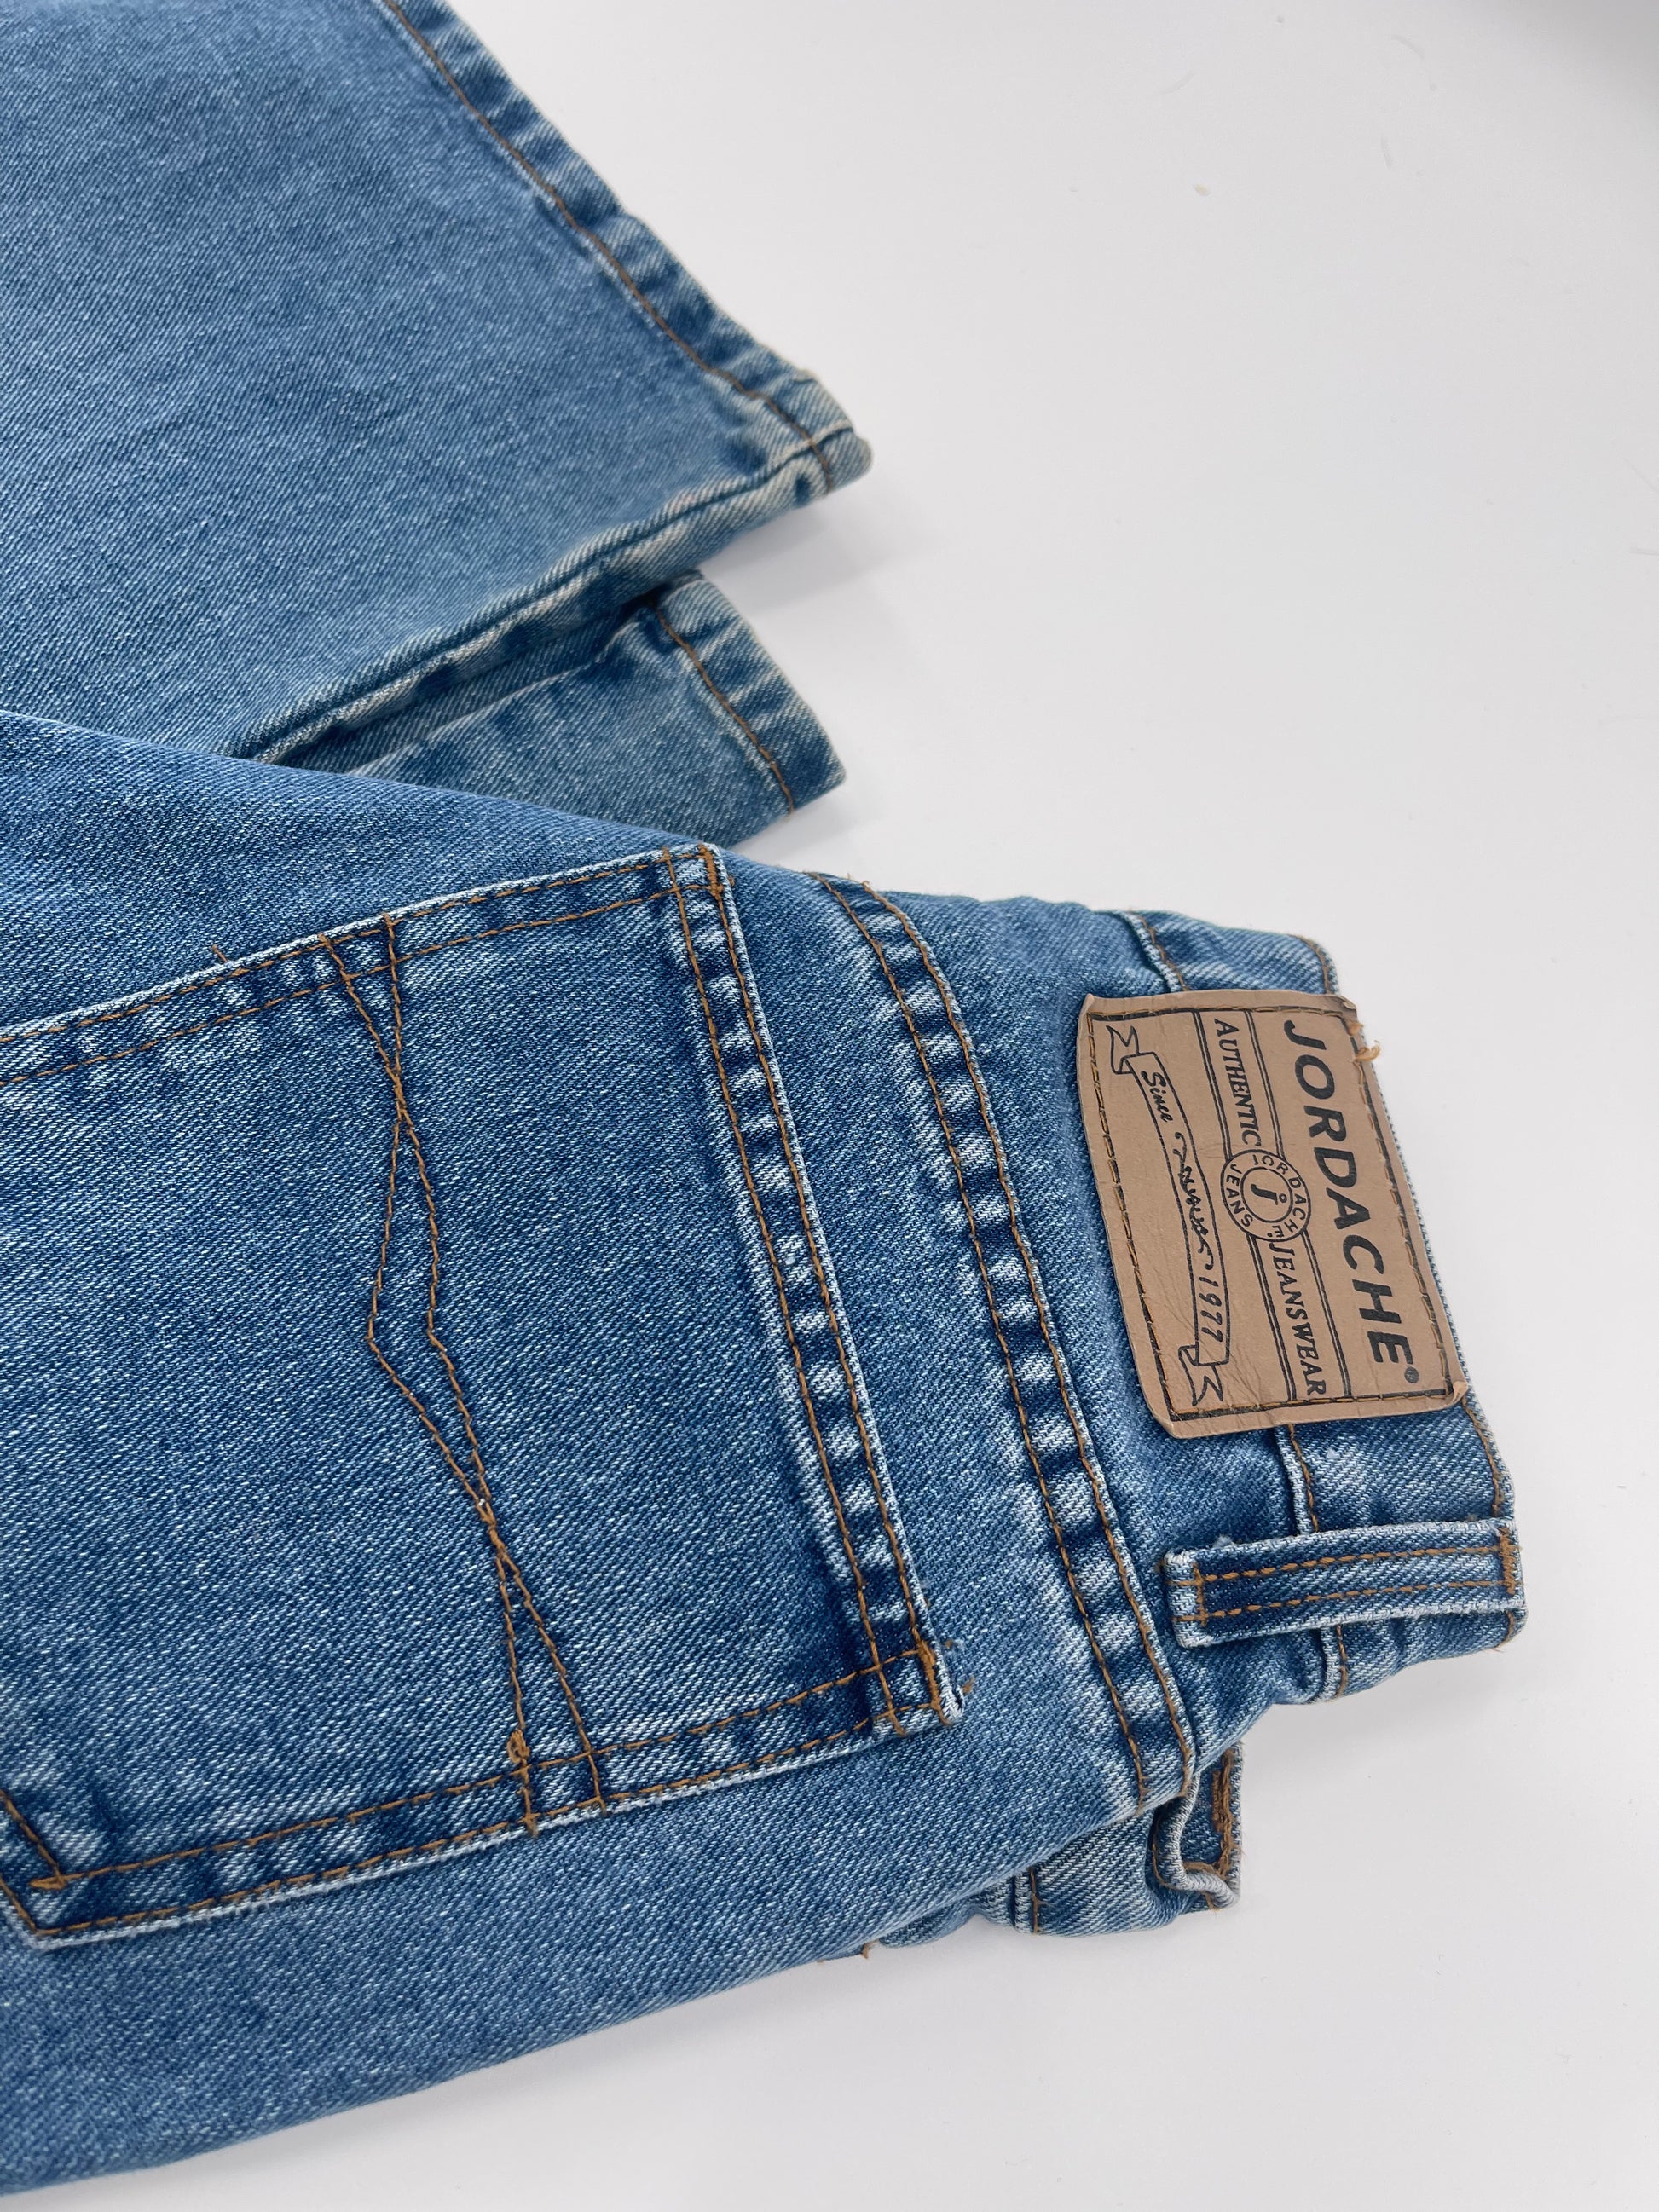 Vintage Deadstock Jordache Jeans (Sz 11/12)